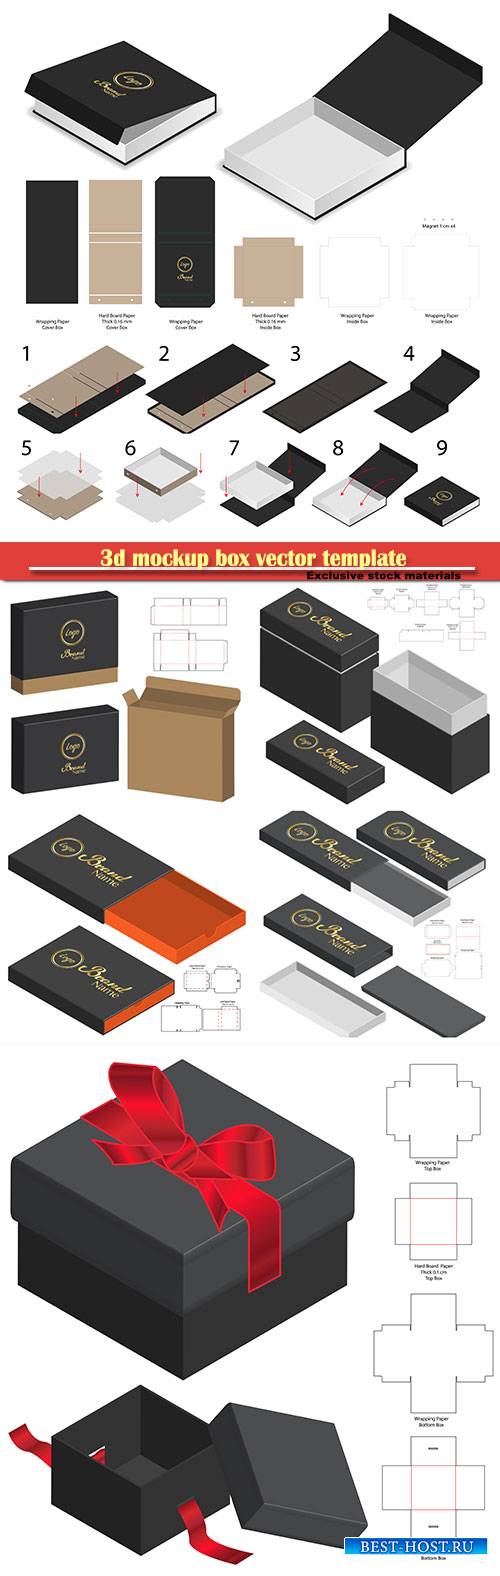 3d mockup box vector template